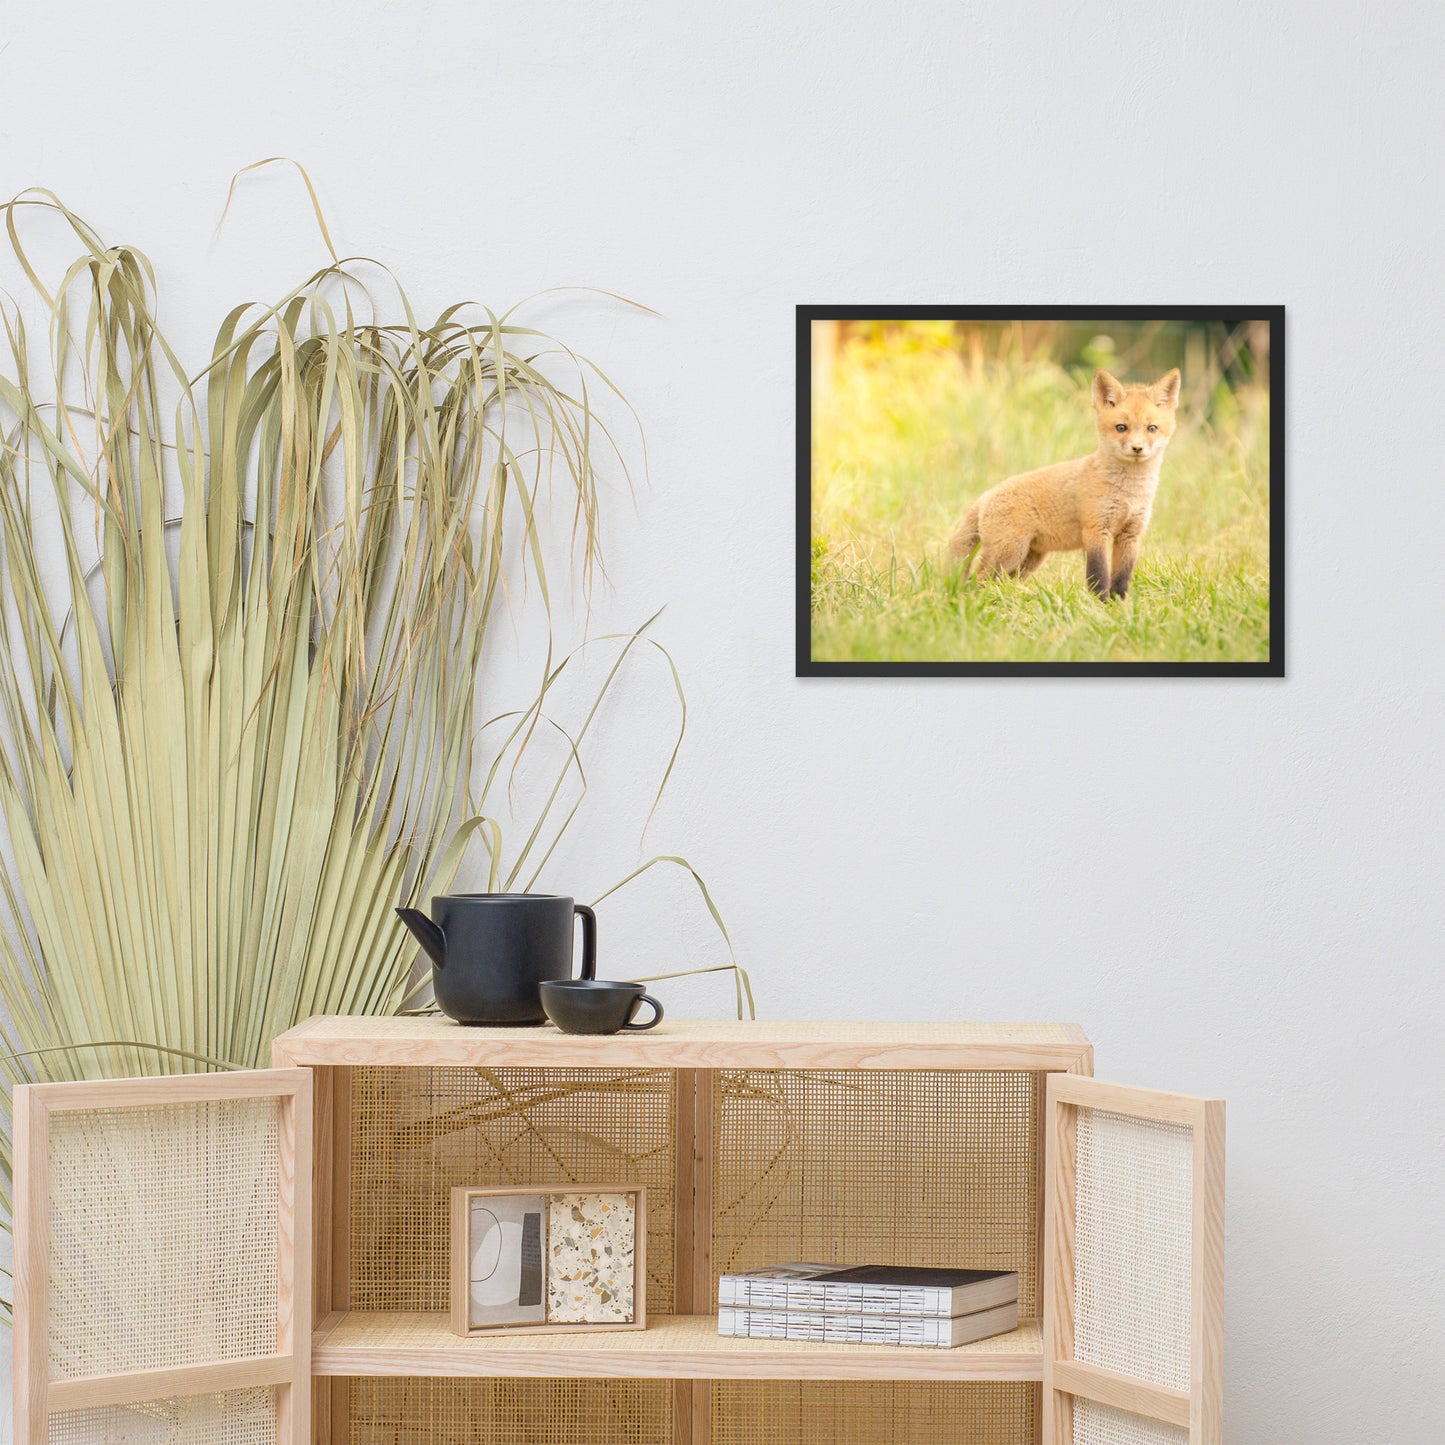 Nursery Animal Framed Prints: Baby Red Fox in the Sun - Animal / Wildlife / Nature Artwork - Wall Decor - Framed Wall Art Print